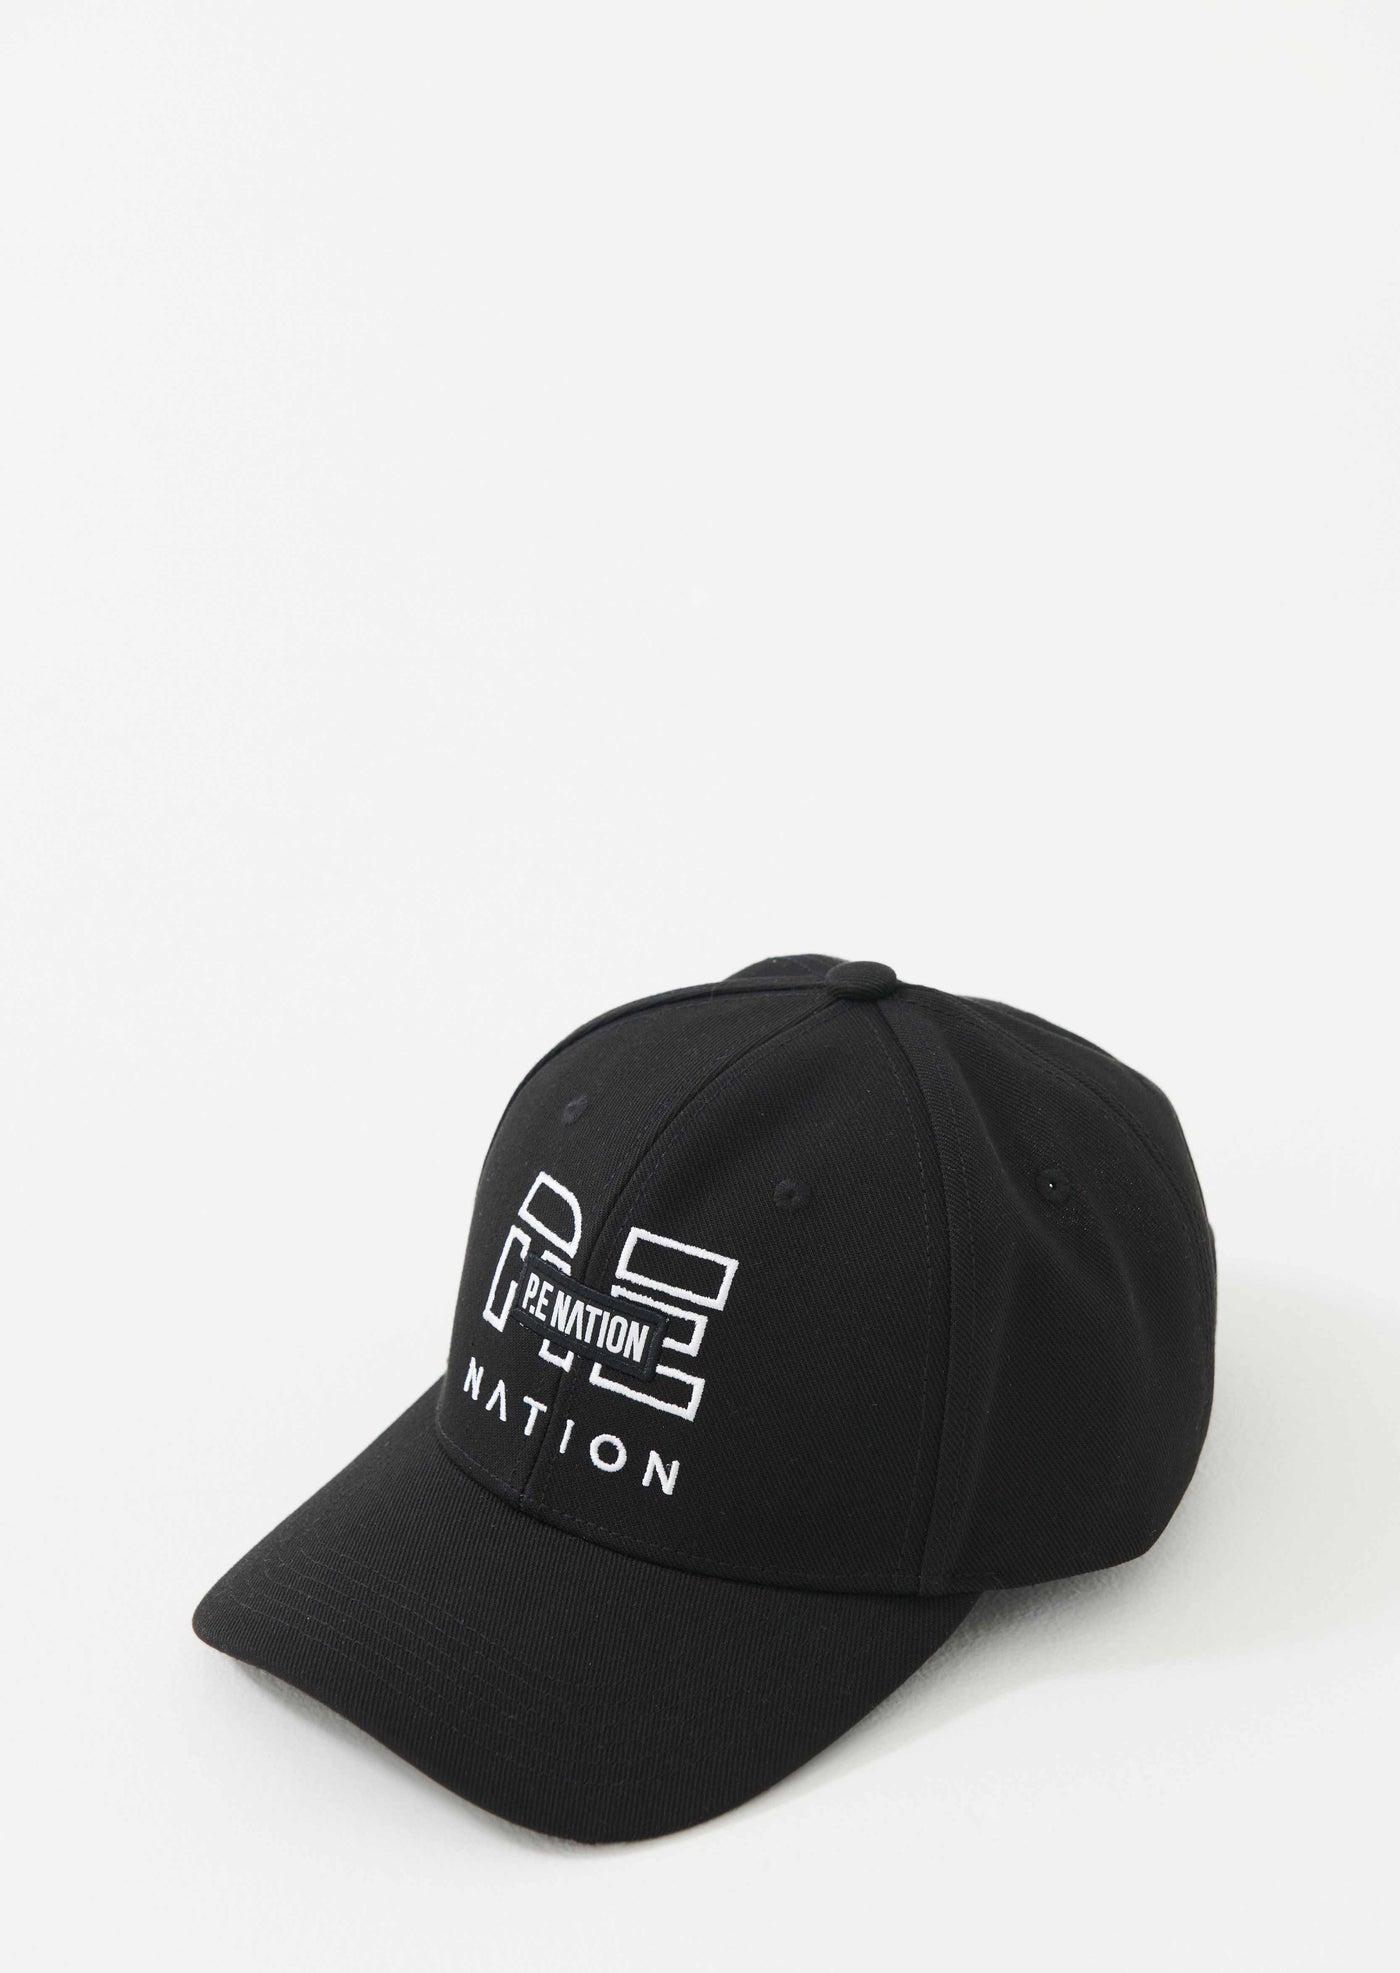 FRONTSIDE CAP IN BLACK